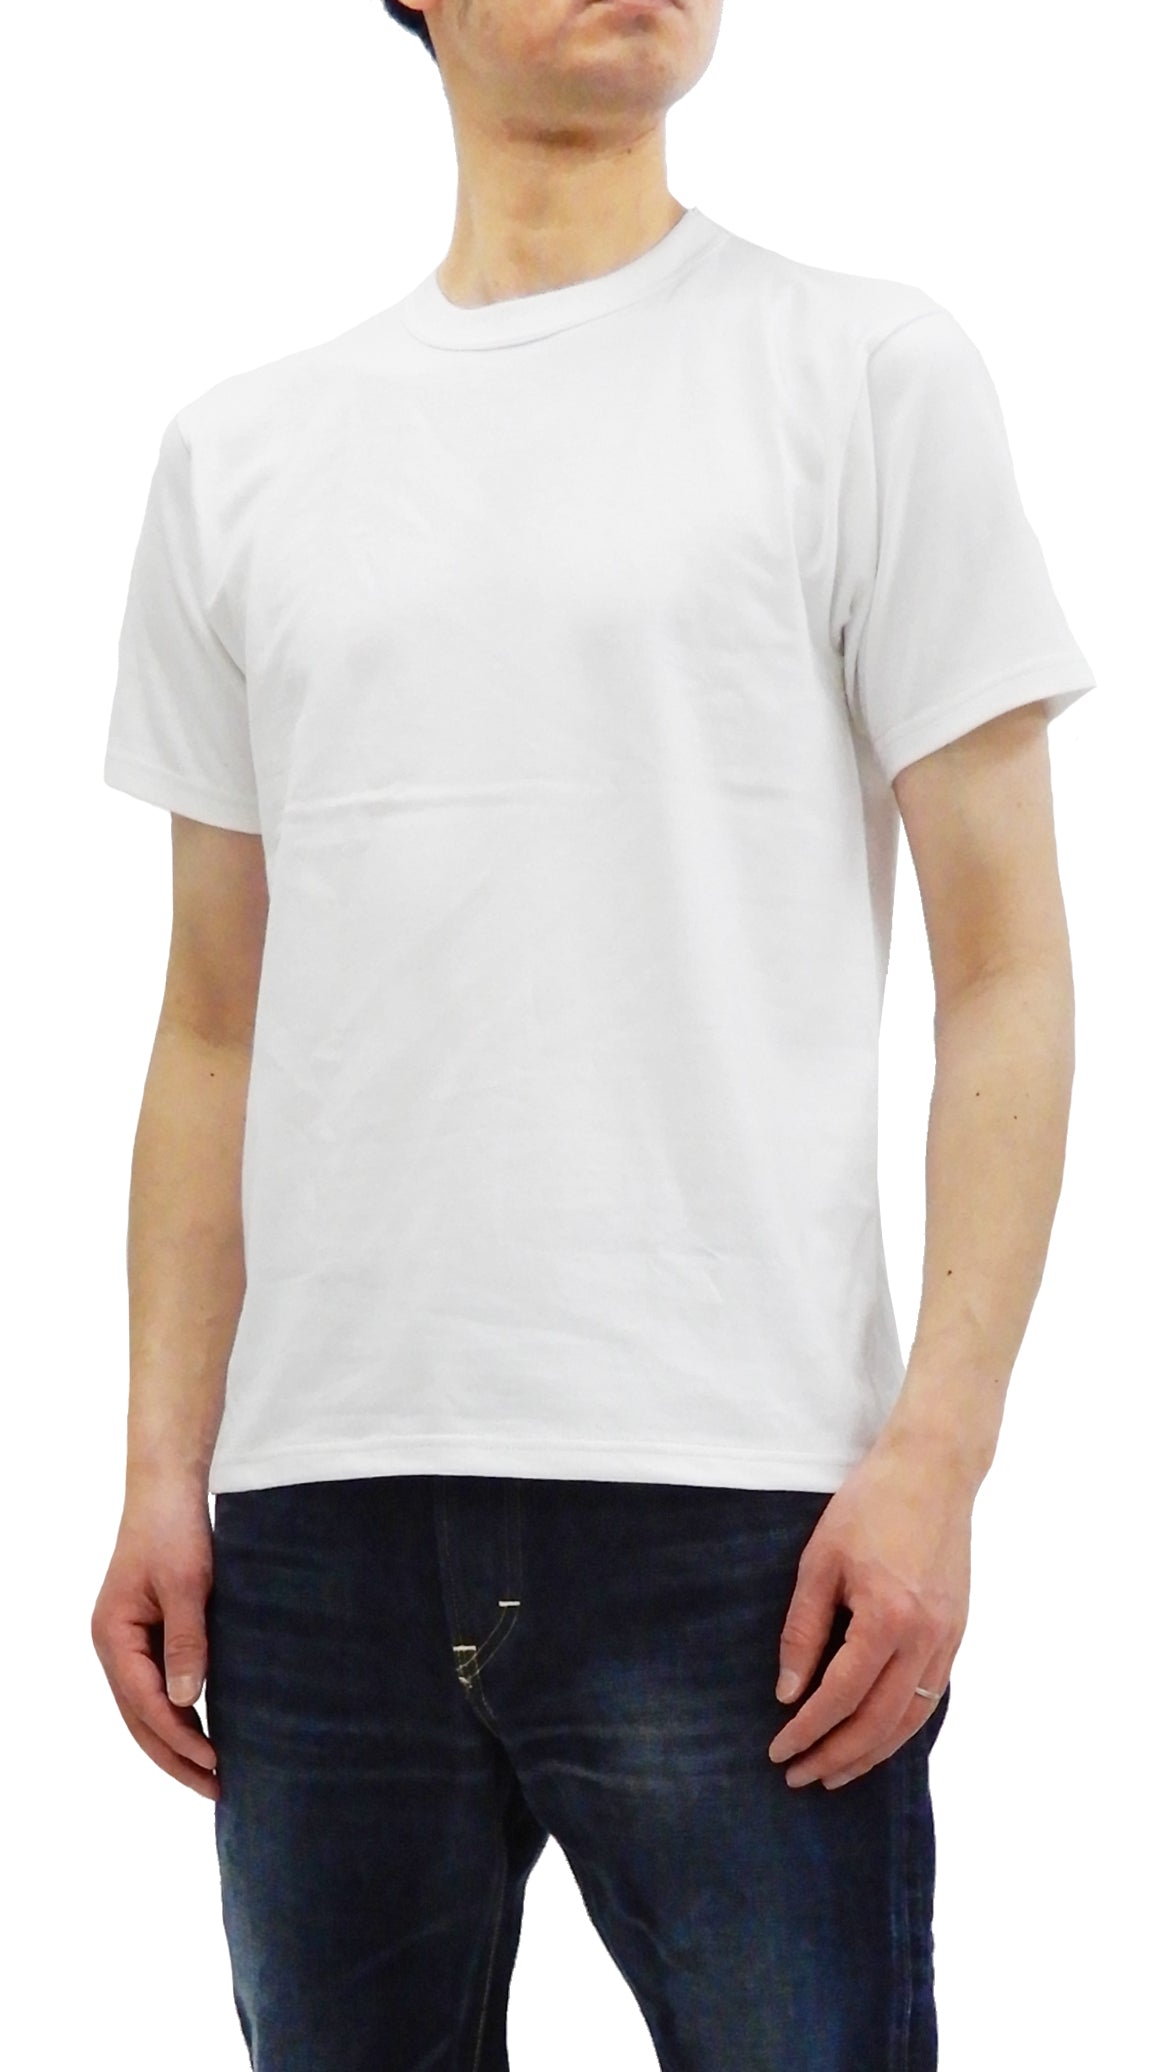 Whitesvill Men's 2-Pack Plain T-shirt Short Sleeve Tee Toyo